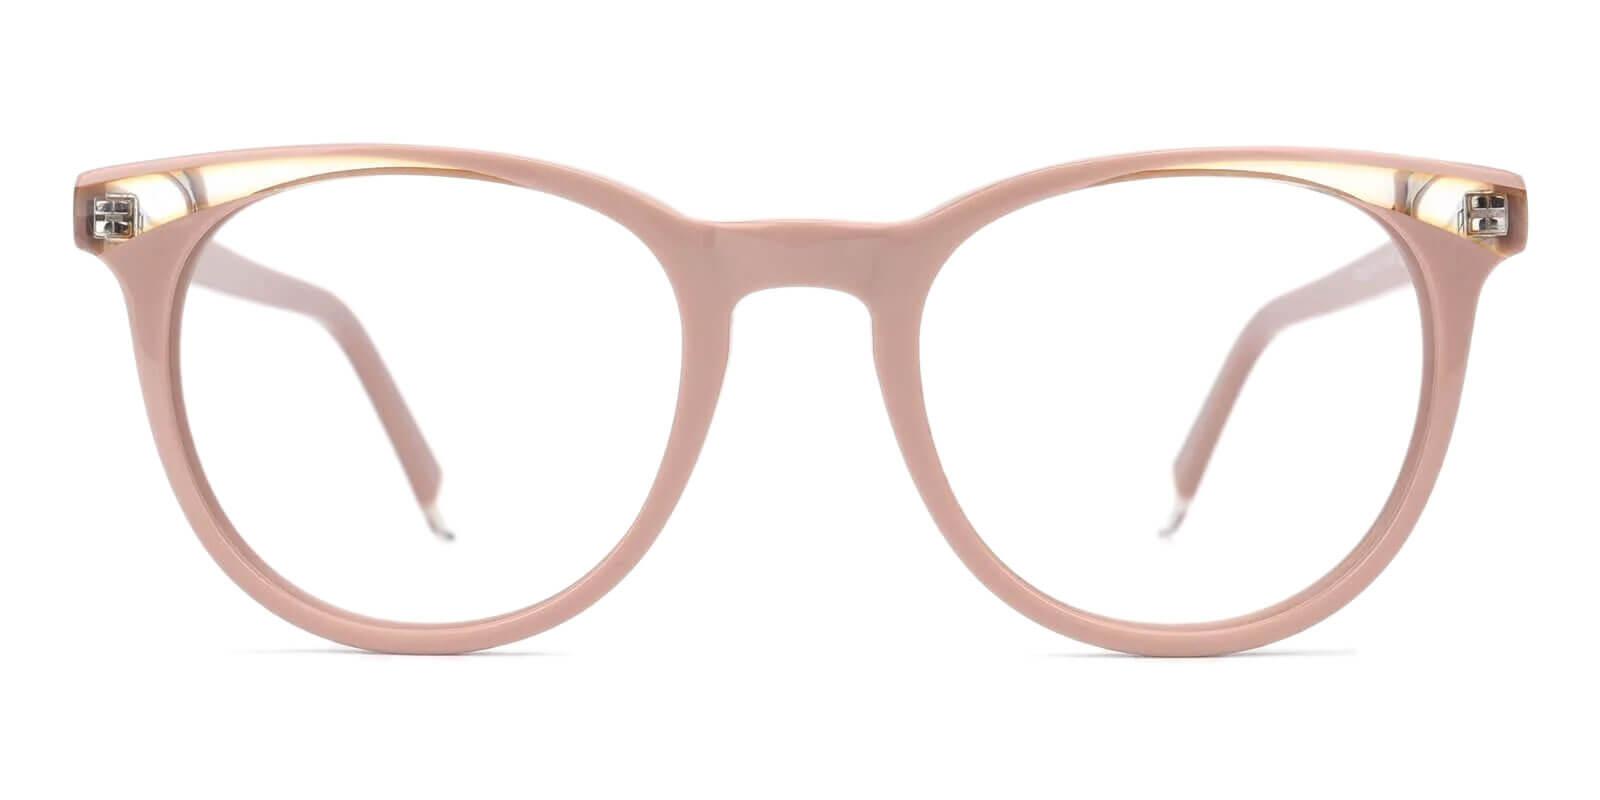 Dimona Pink Acetate Eyeglasses , UniversalBridgeFit Frames from ABBE Glasses